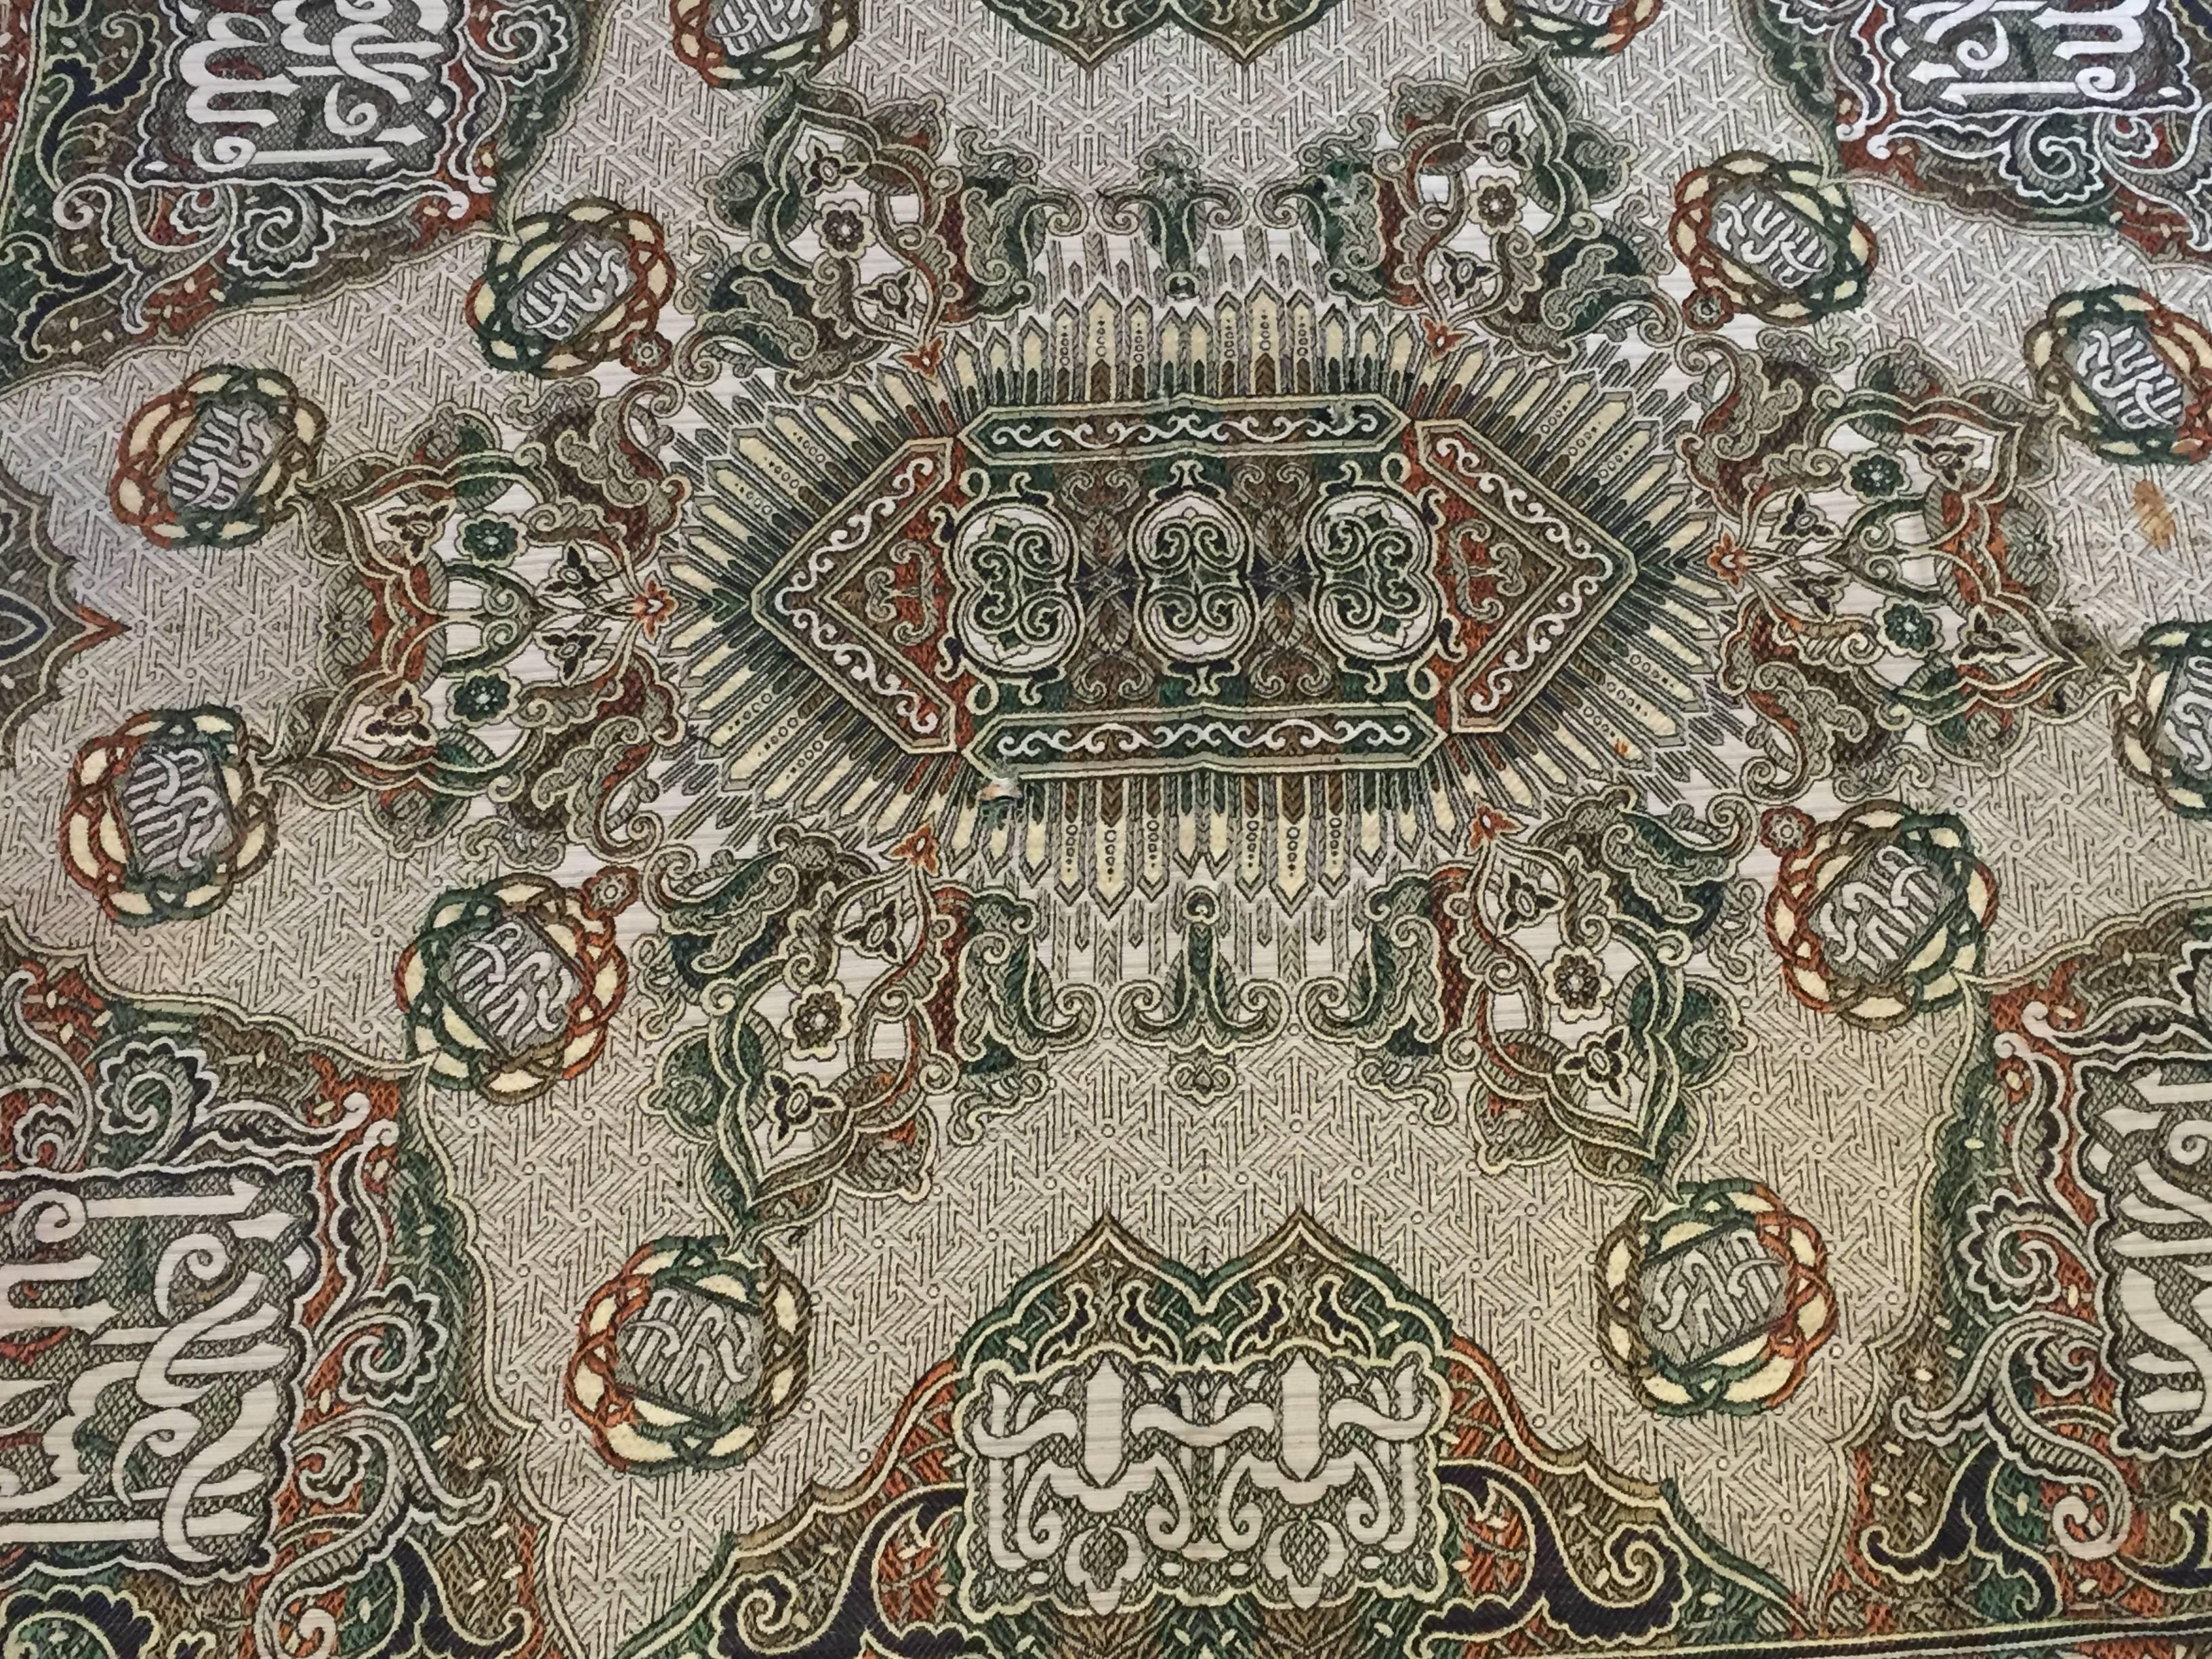 Granada Islamic Spain Textile with Moorish Calligraphy Writing 4